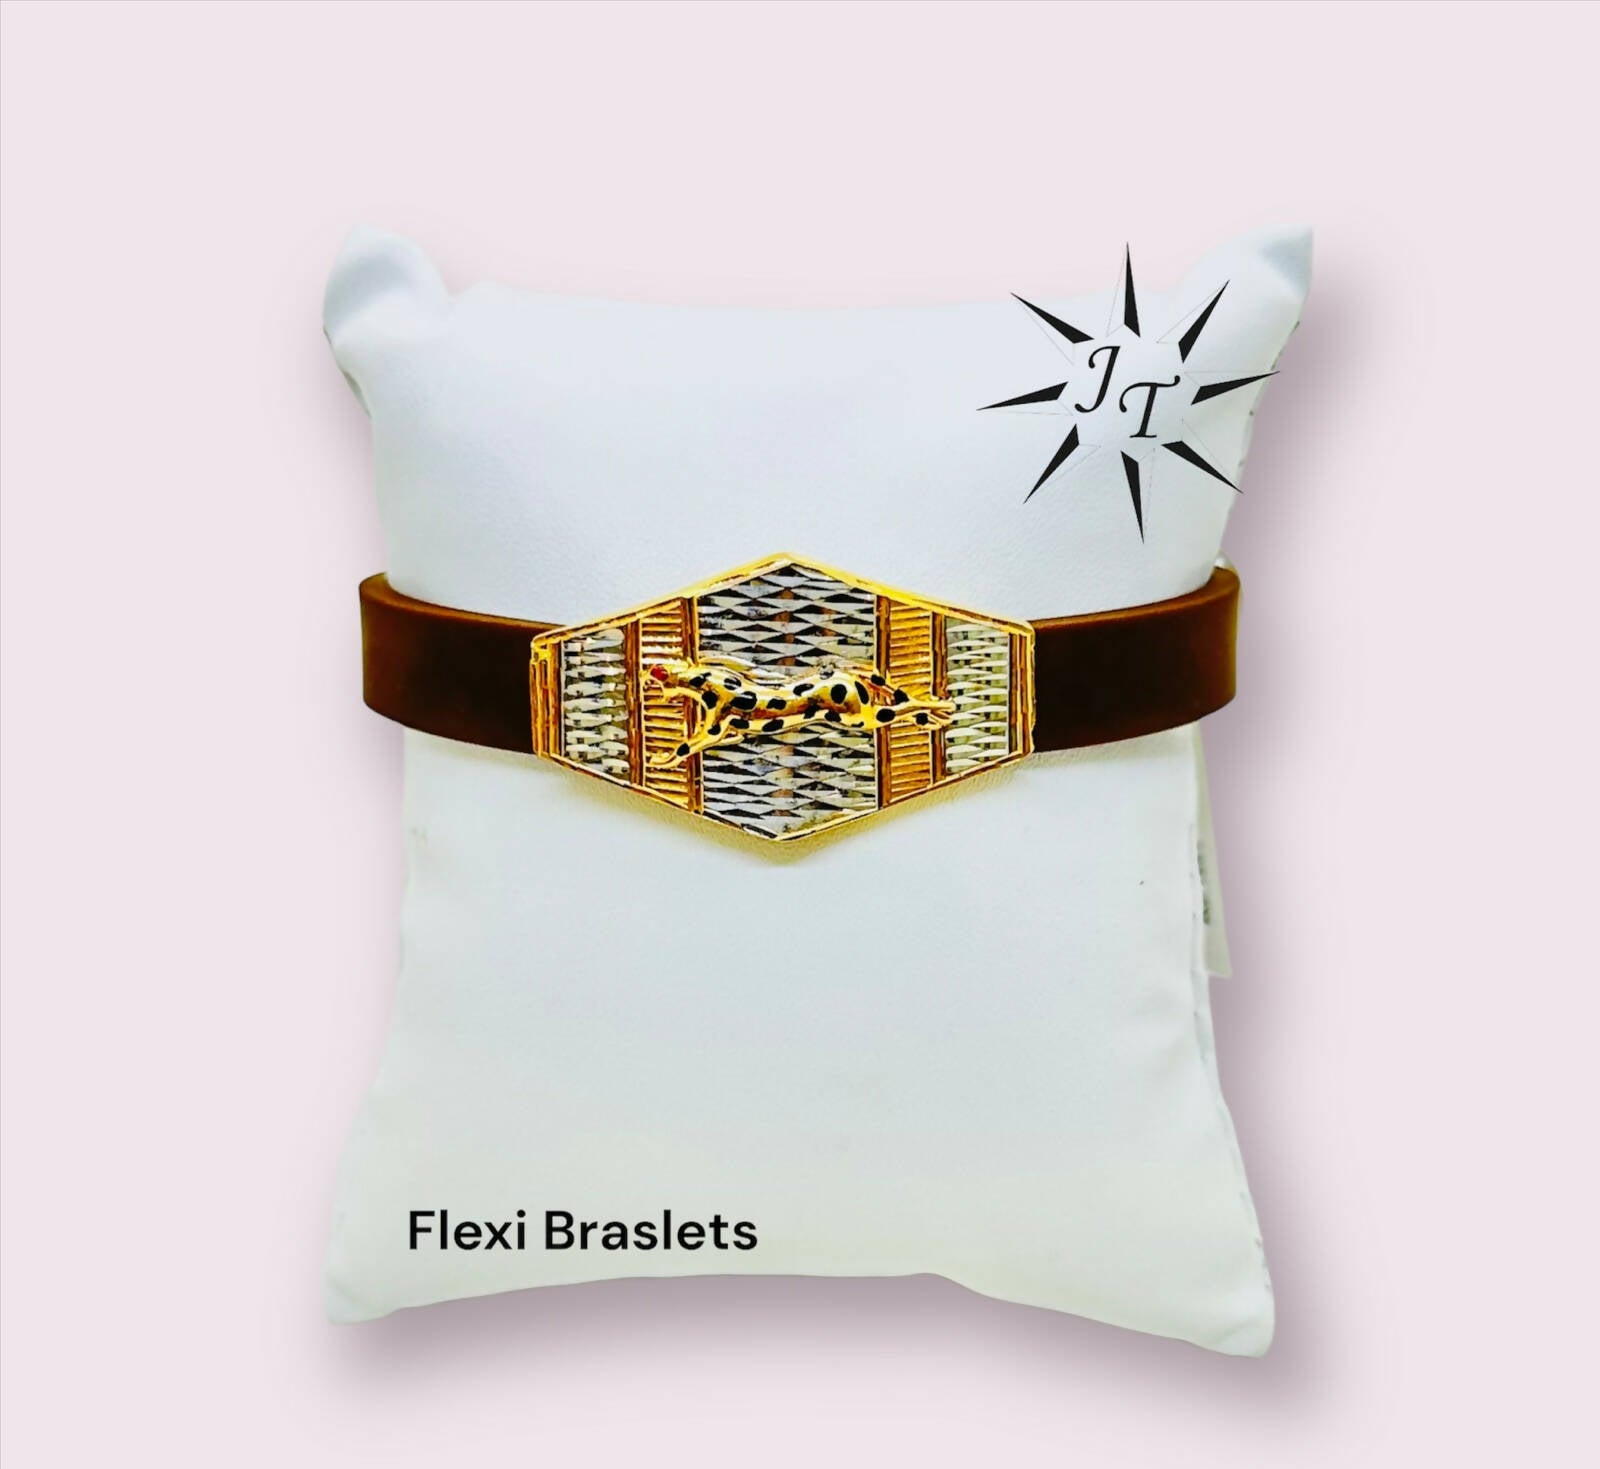 Flexi Bracelet Sarafa Bazar India